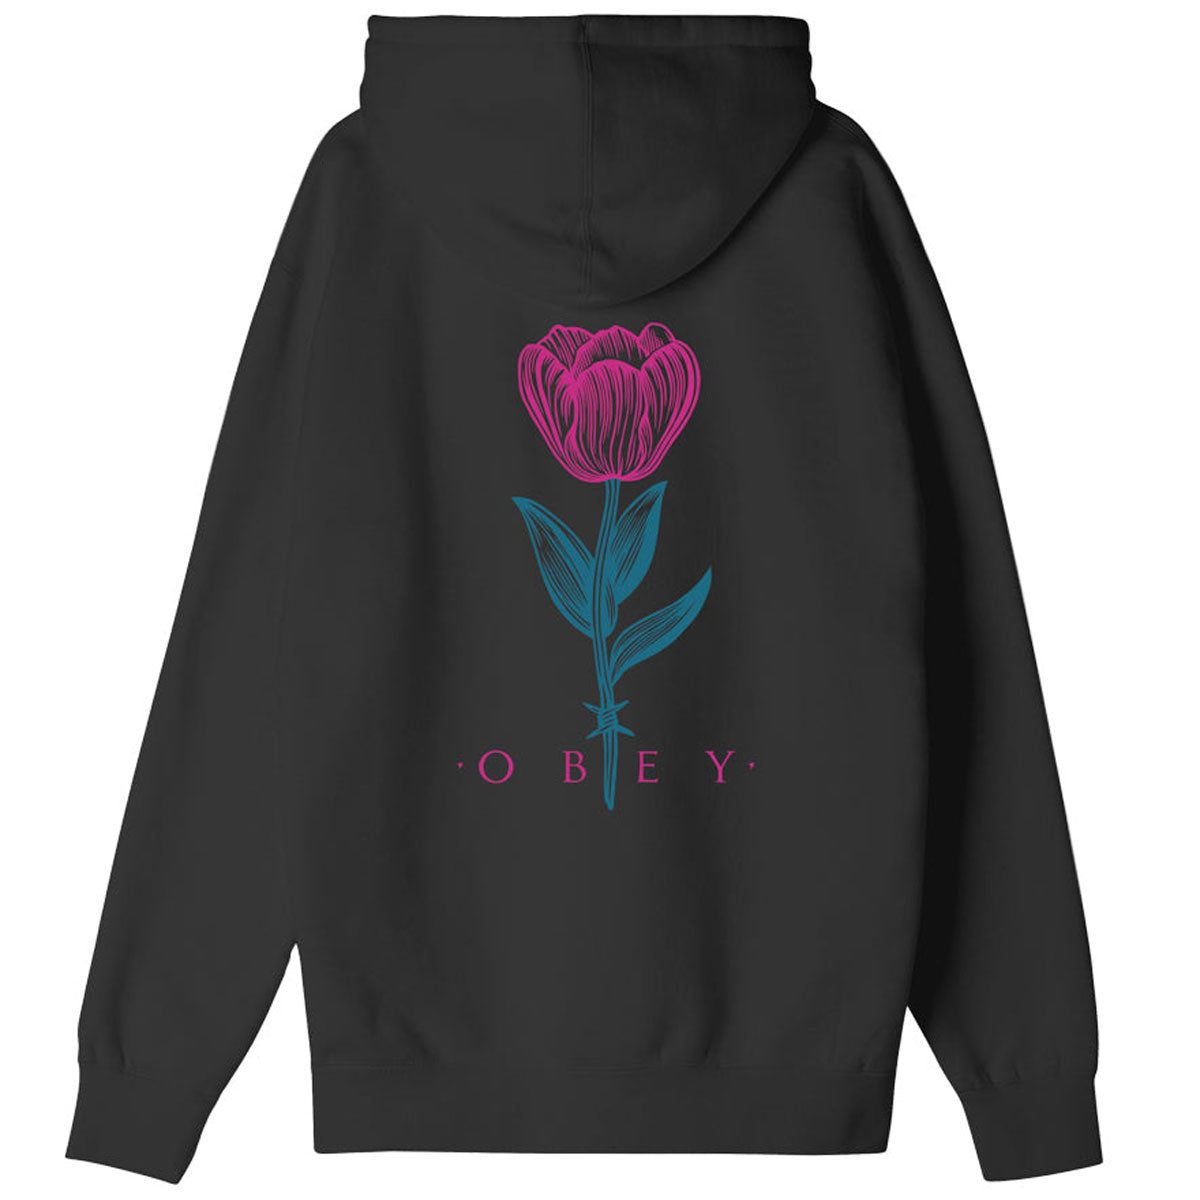 Obey Barbwire Flower Sweatshirt - Black image 2